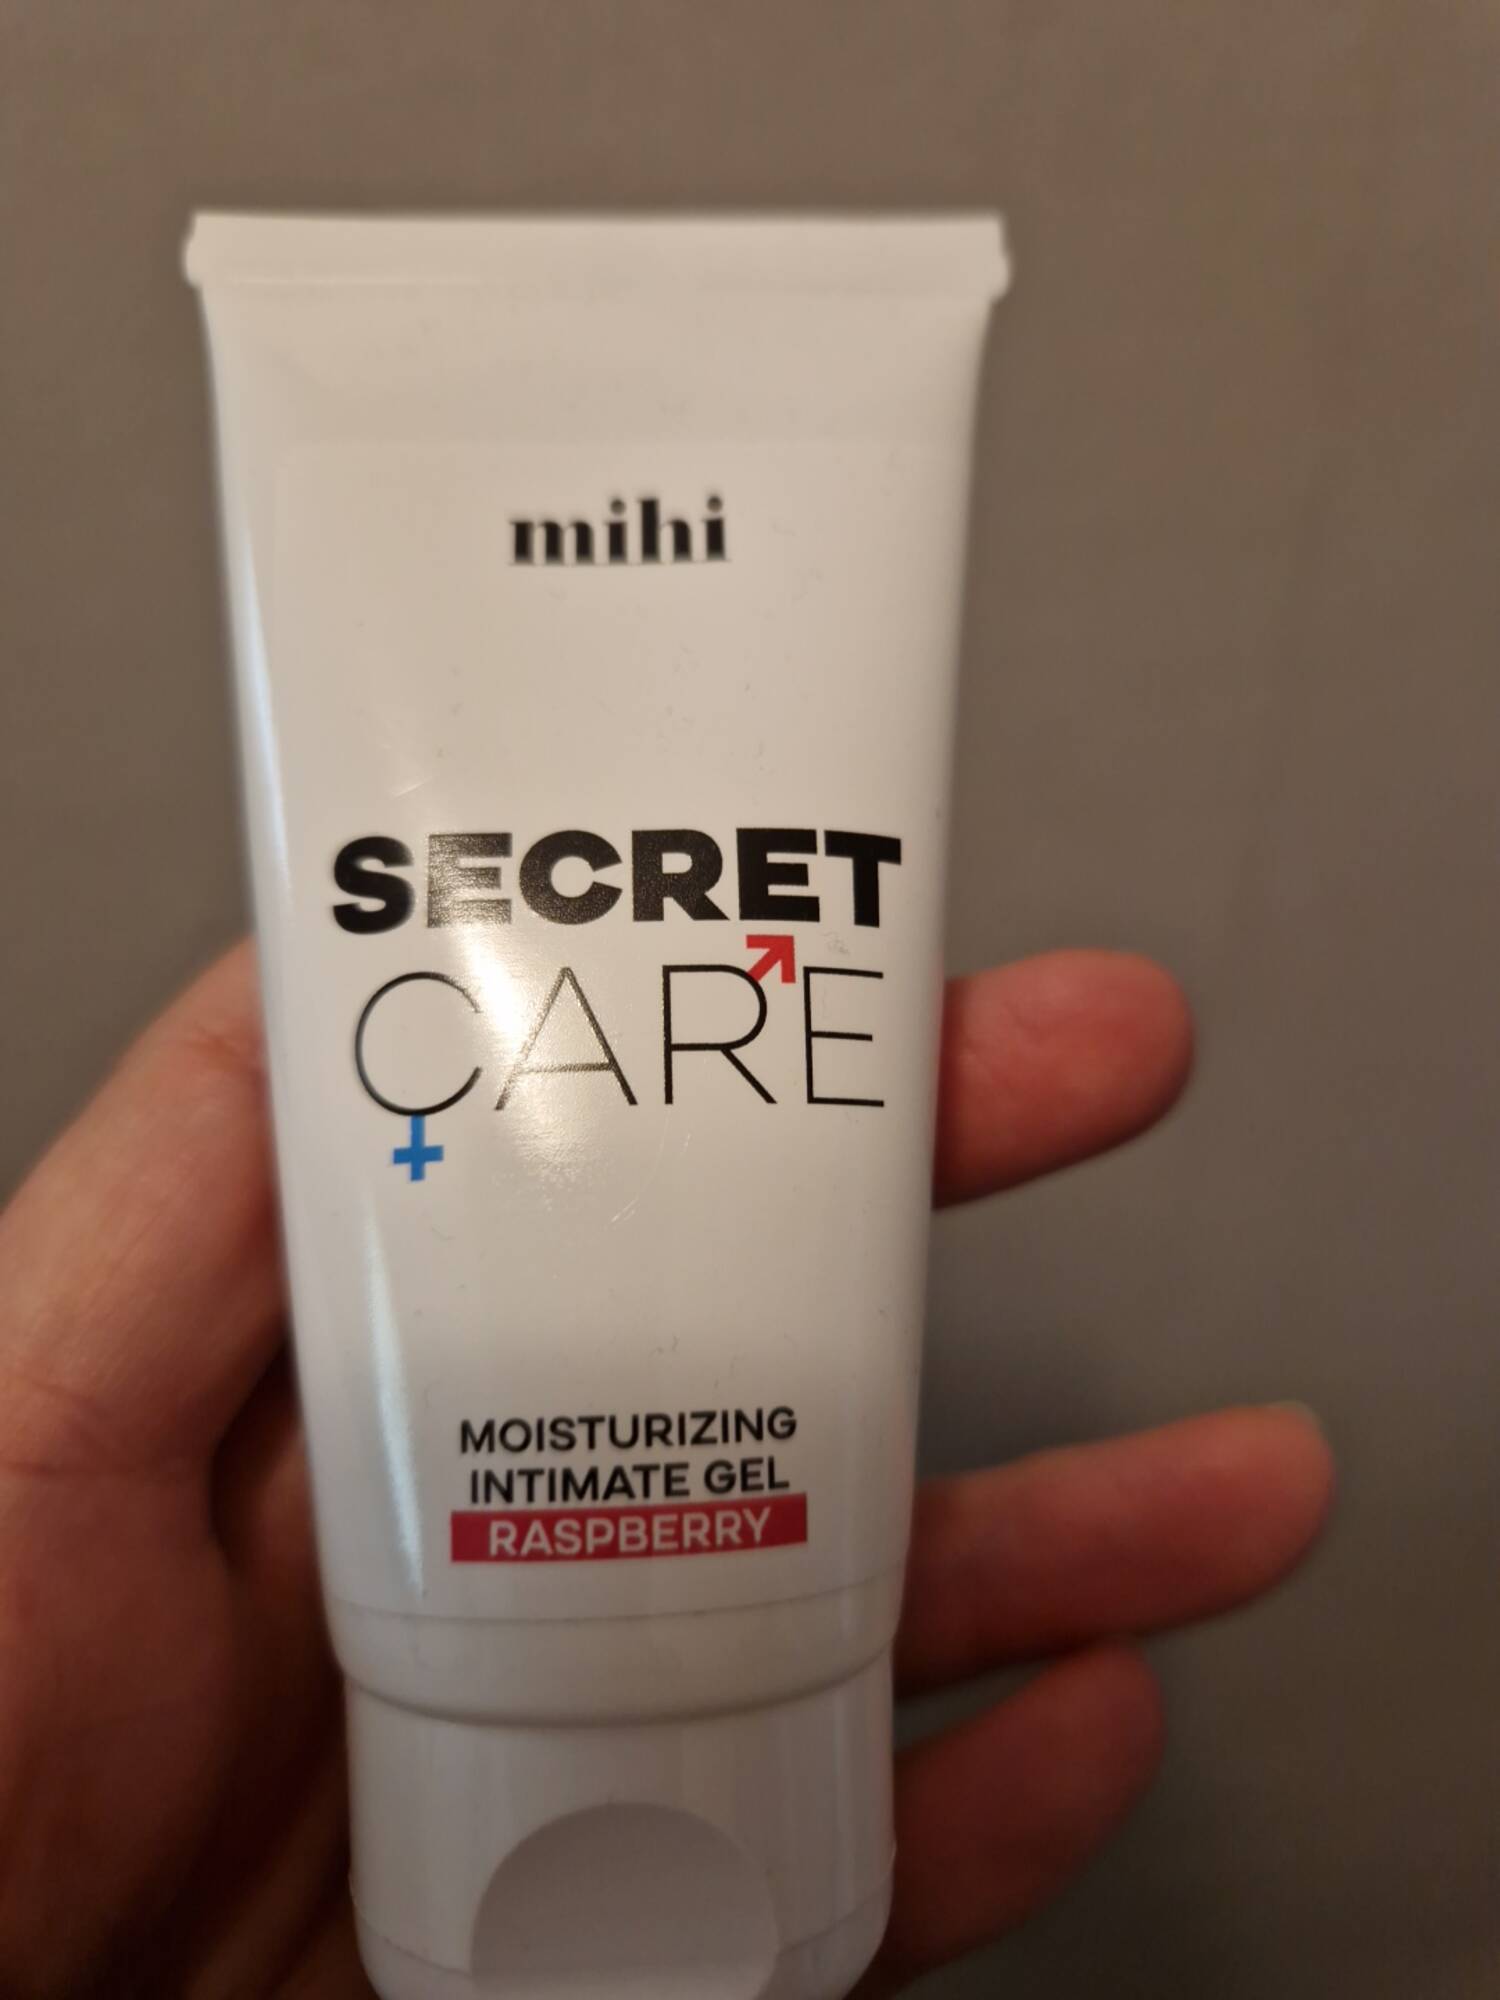 MIHI - Secret care - Moisturizing intimite gel raspberry